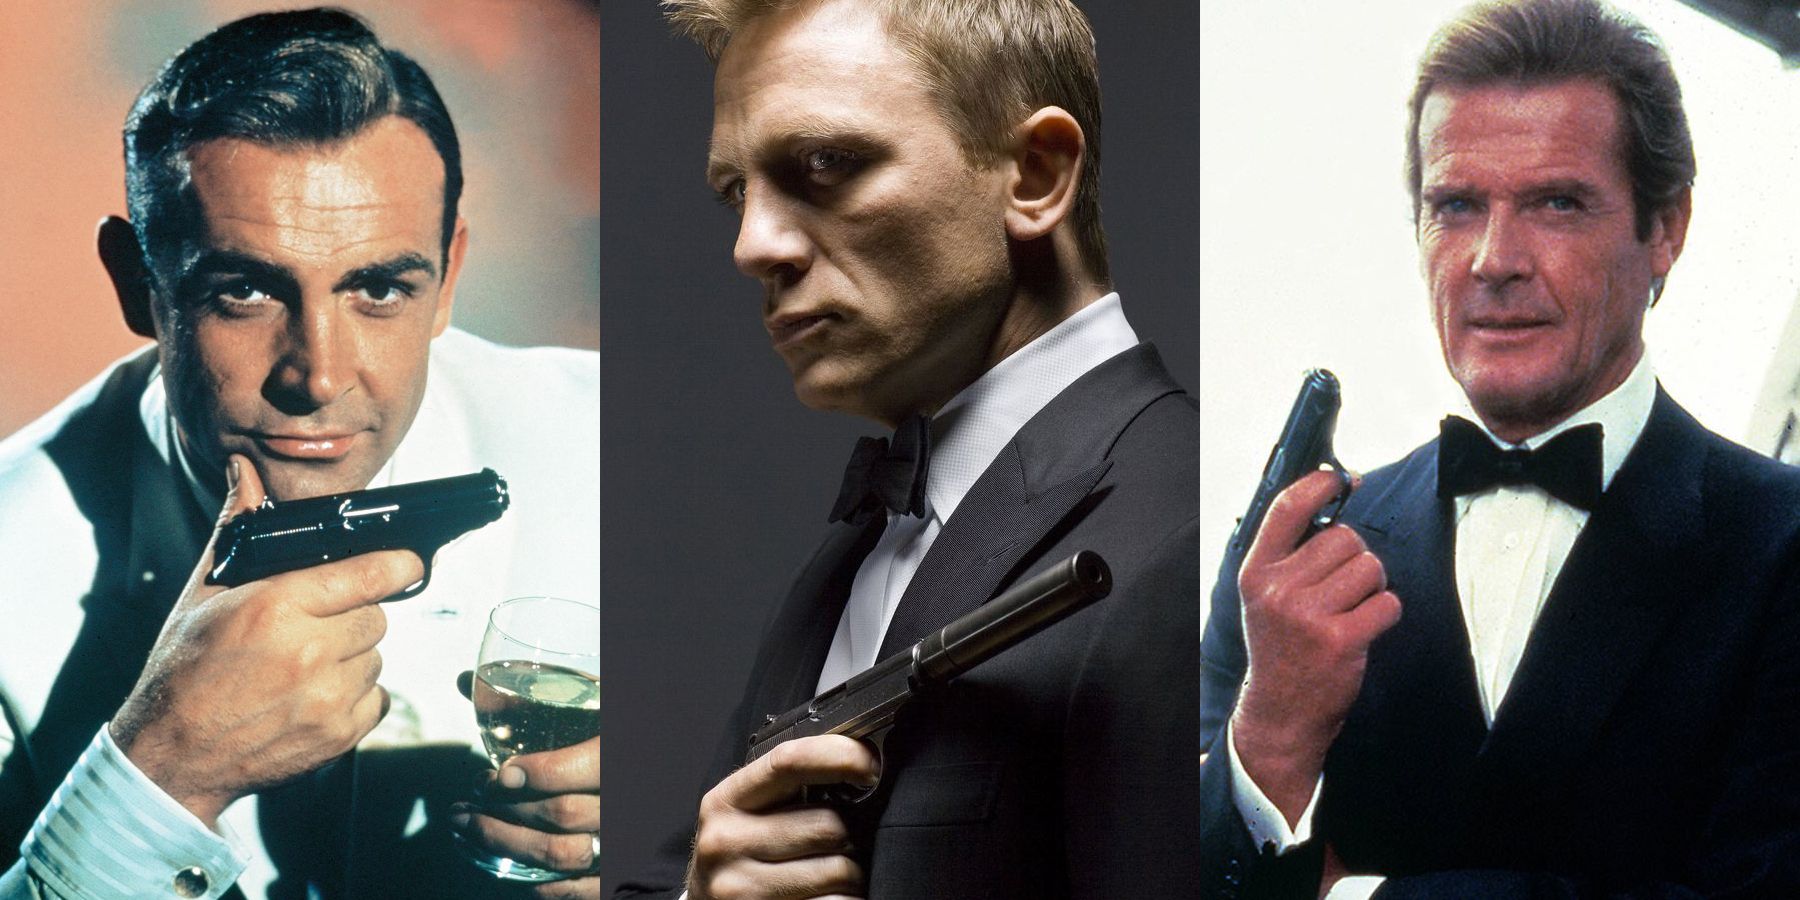 Sean Connery, Daniel Craig, & Roger Moore holding a gun in James Bond films.